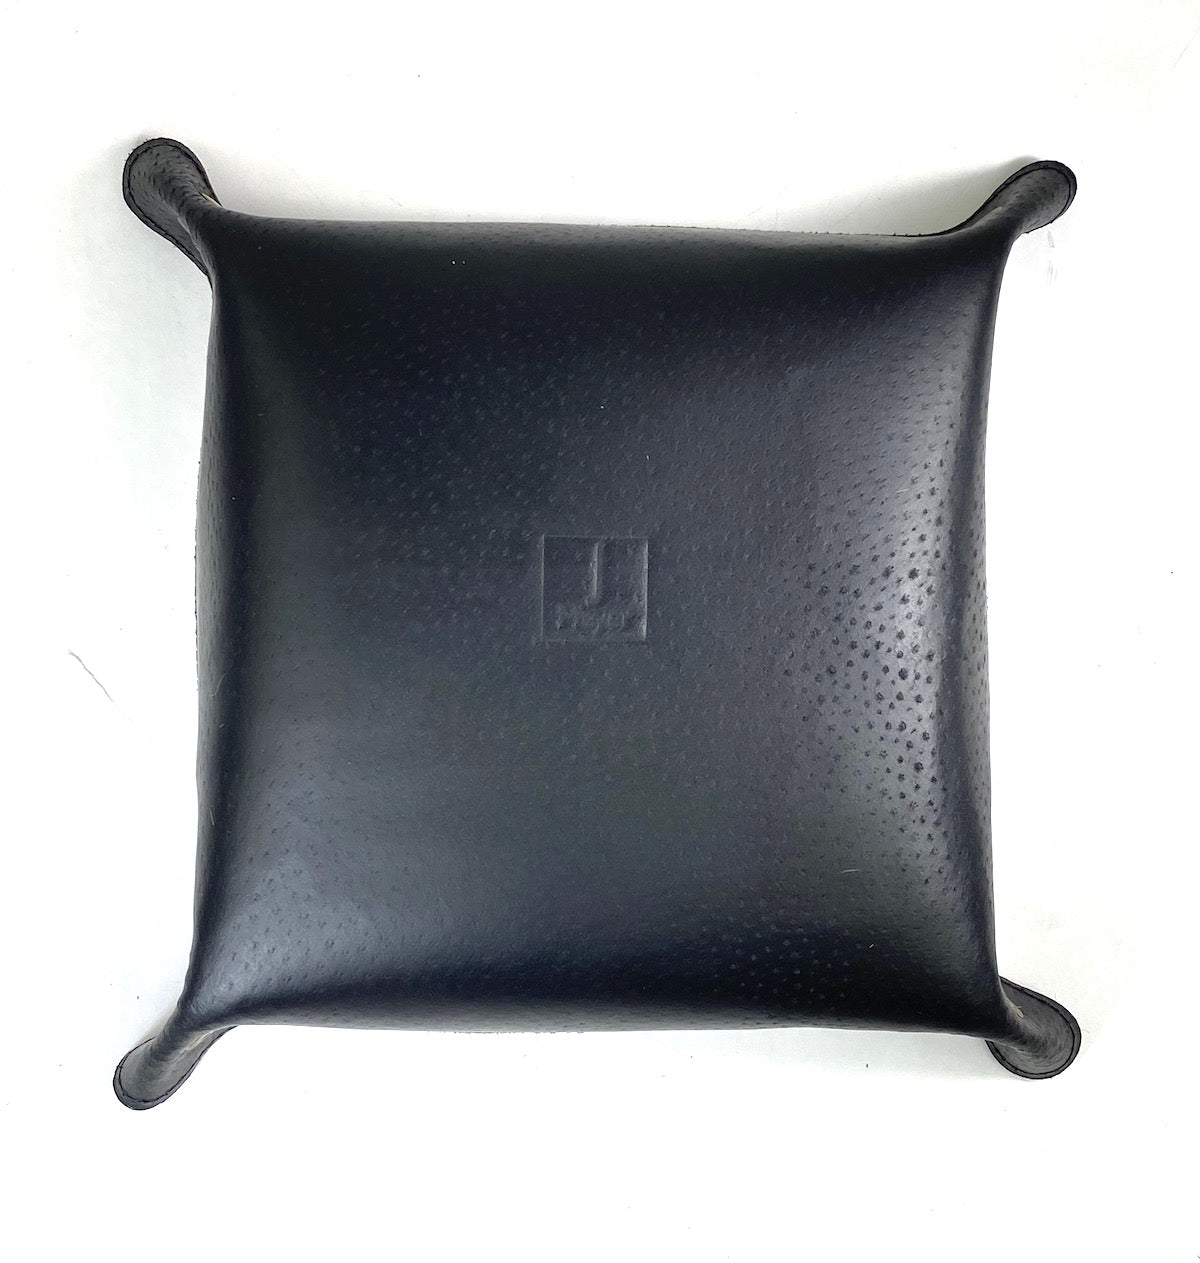 Leather Valet Tray - Burgundy Metallic Weave Print